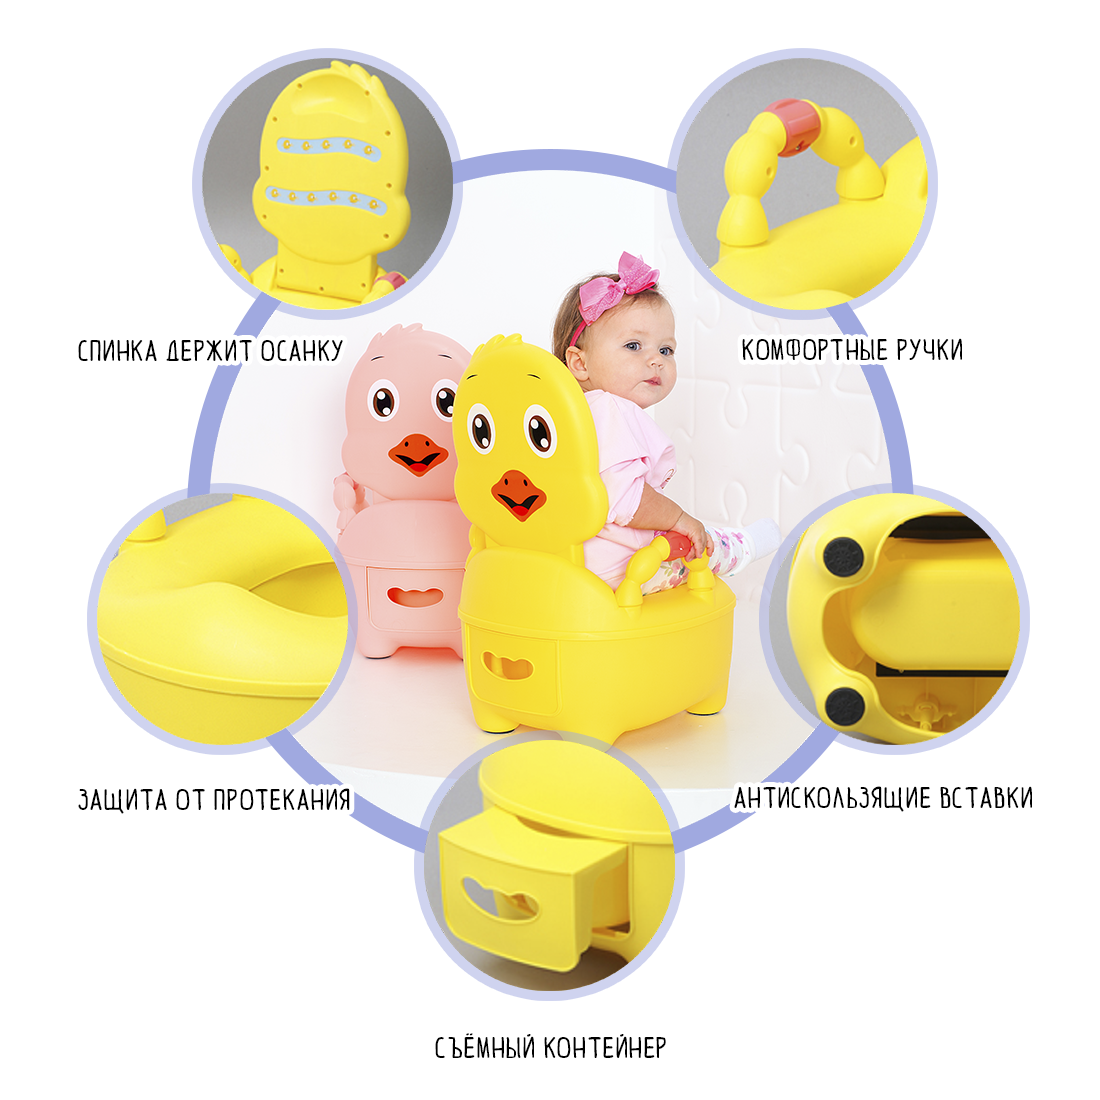 Схема преимуществ горшка PiPi Chick Yellow